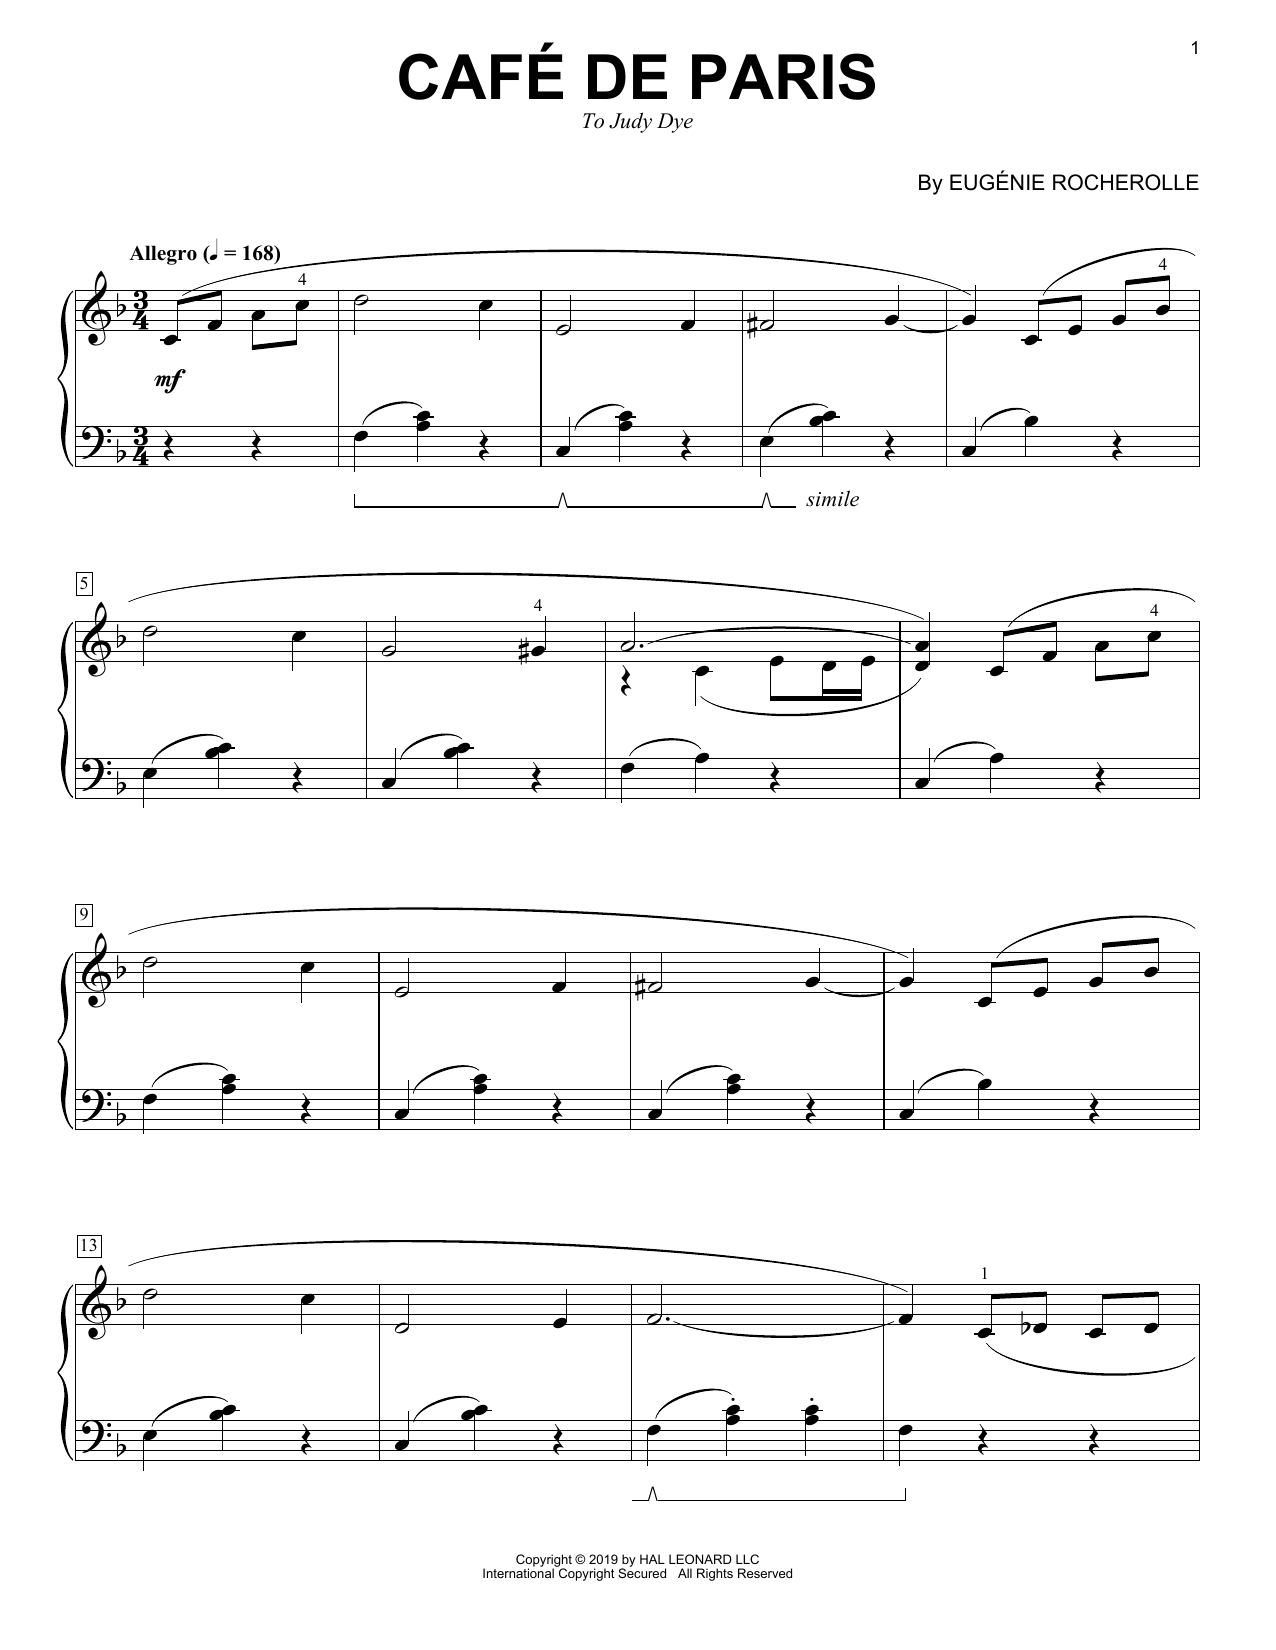 Eugénie Rocherolle Cafe de Paris Sheet Music Notes & Chords for Piano Solo - Download or Print PDF